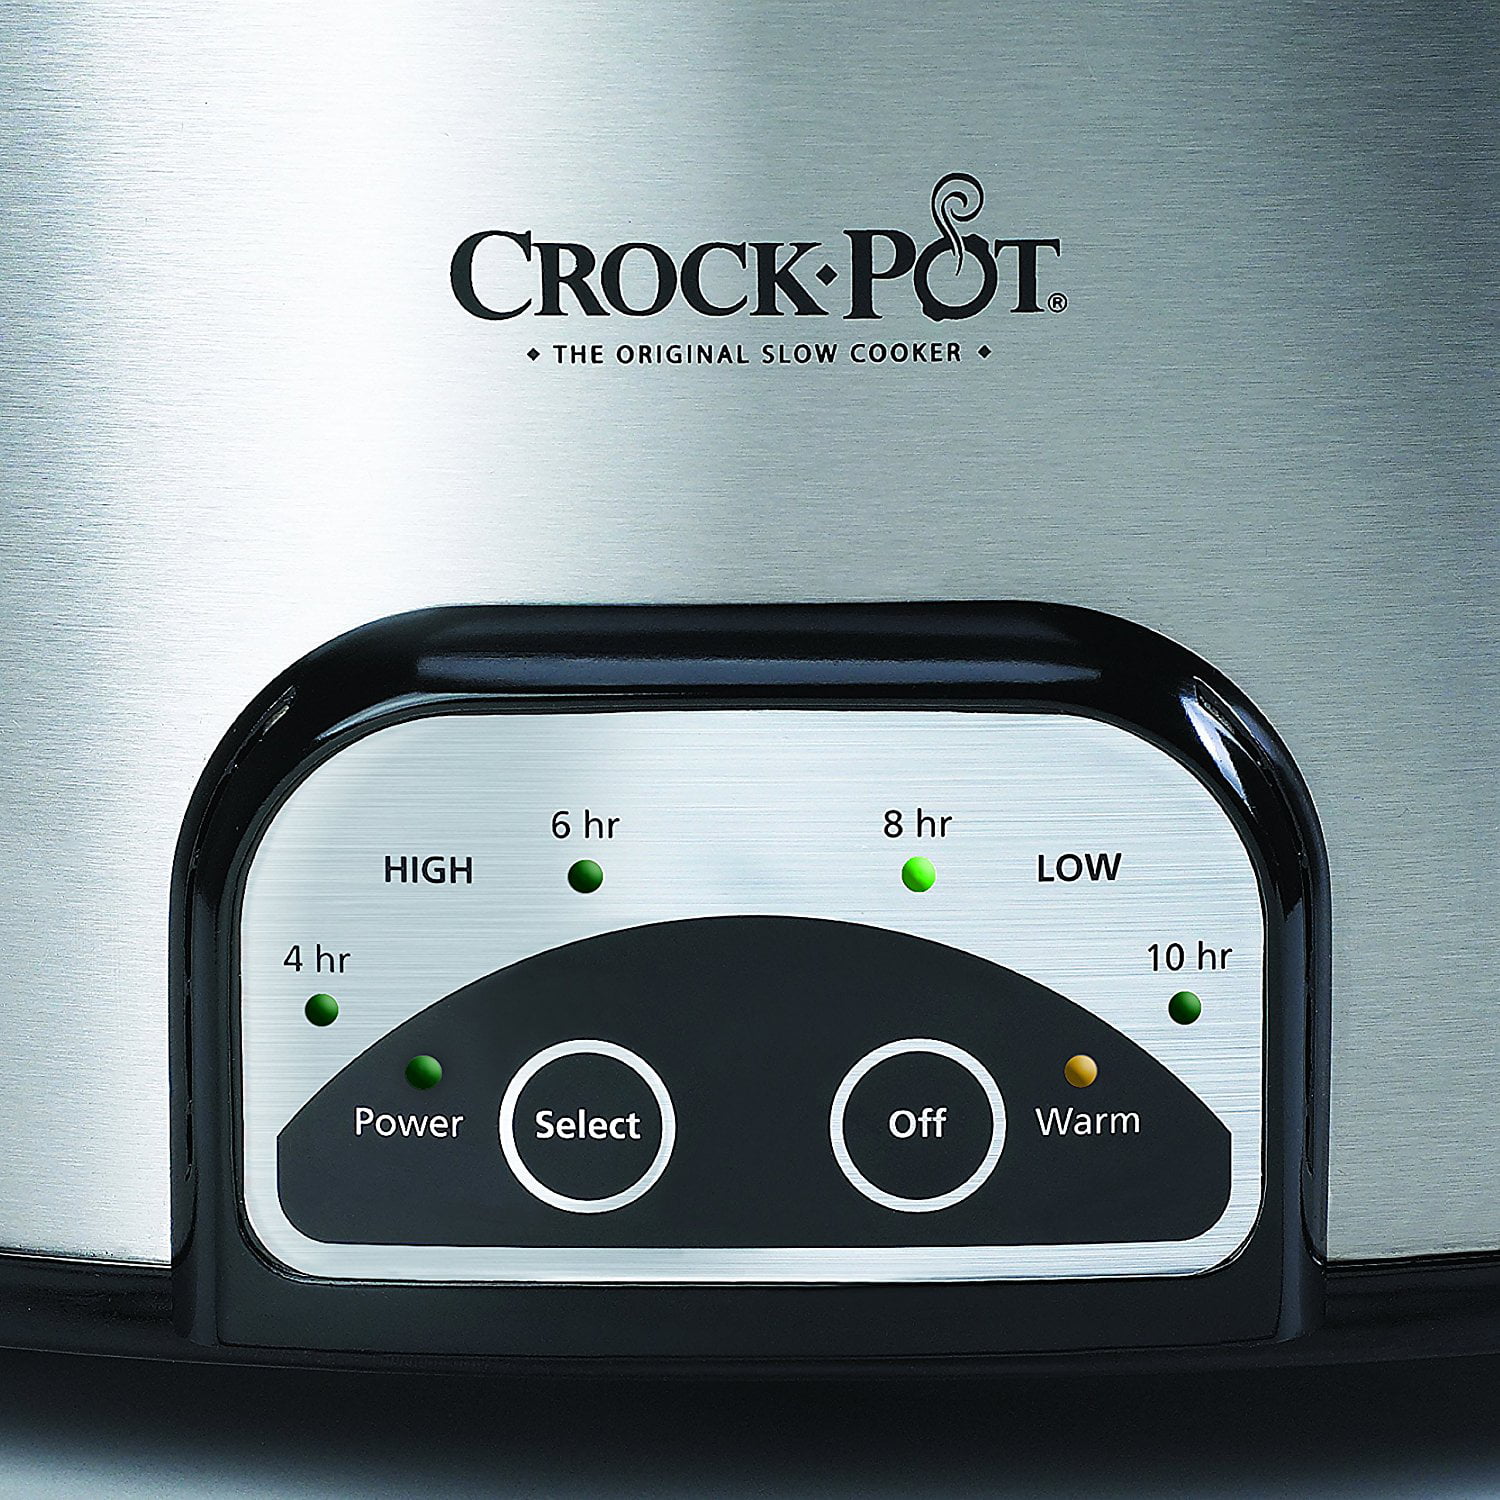 Crock-Pot® 7-Qt. Slow Cooker, Color: Stainless Steel